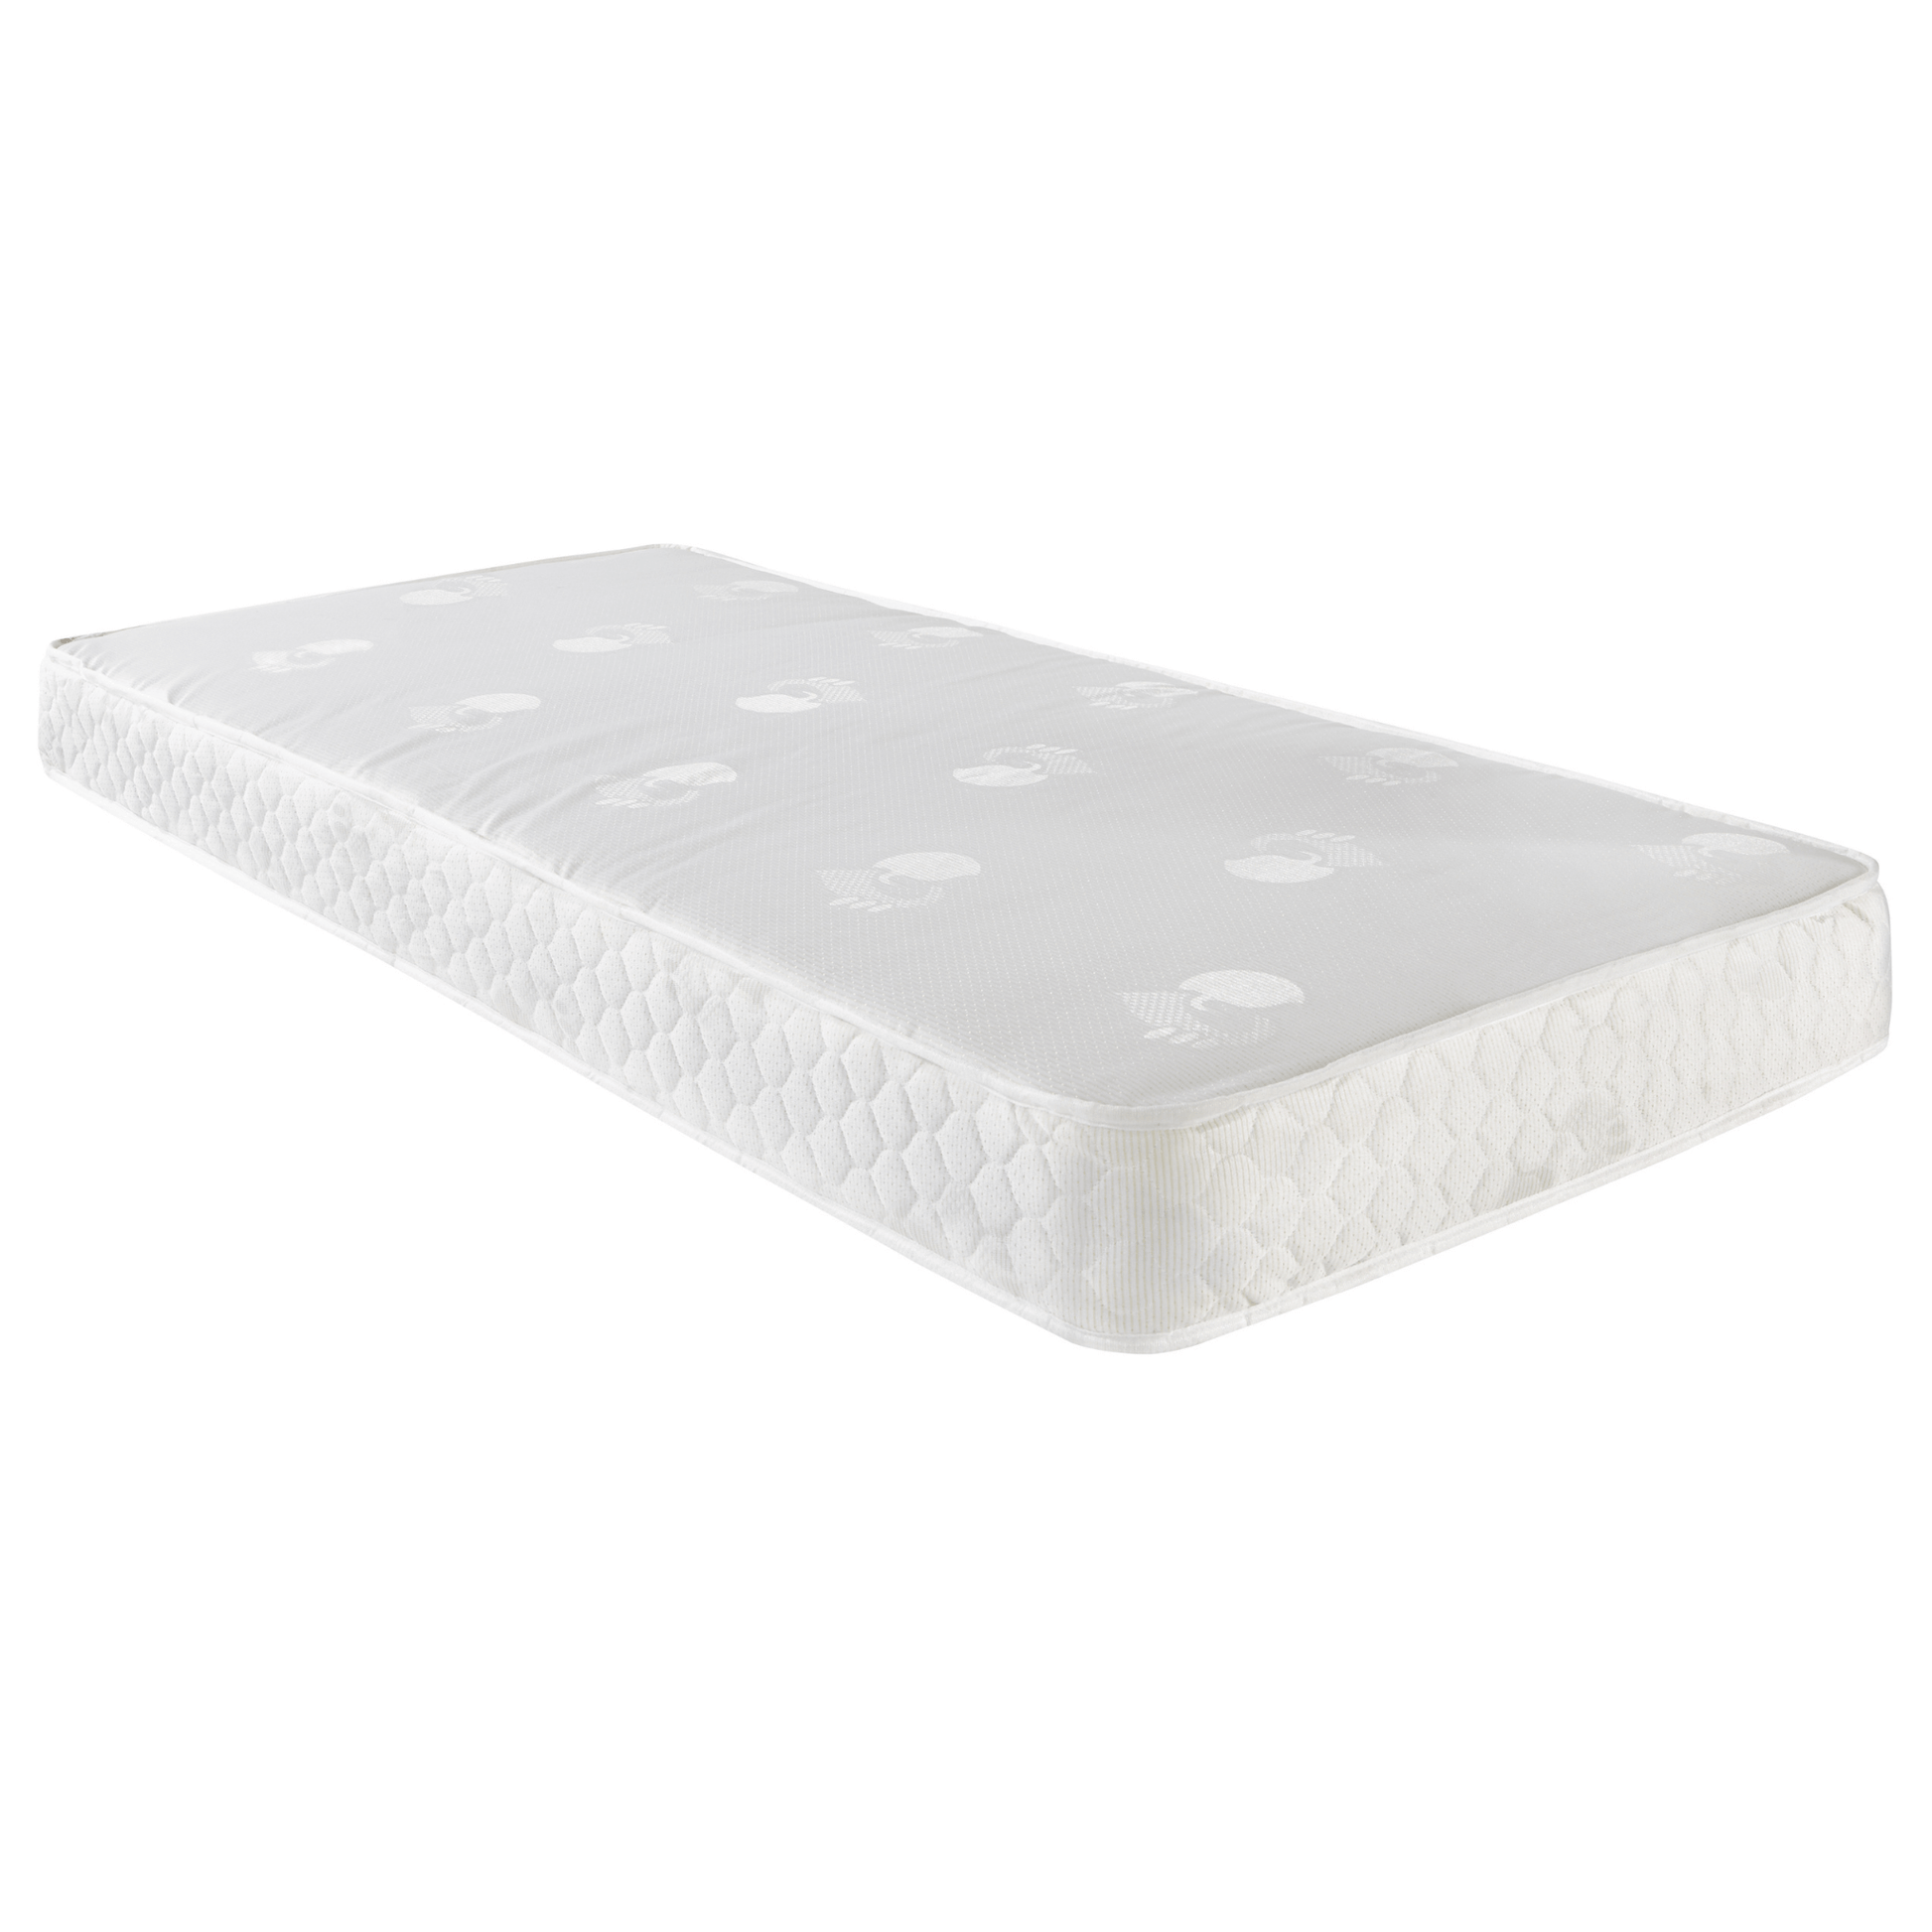 Superior single continental mattress